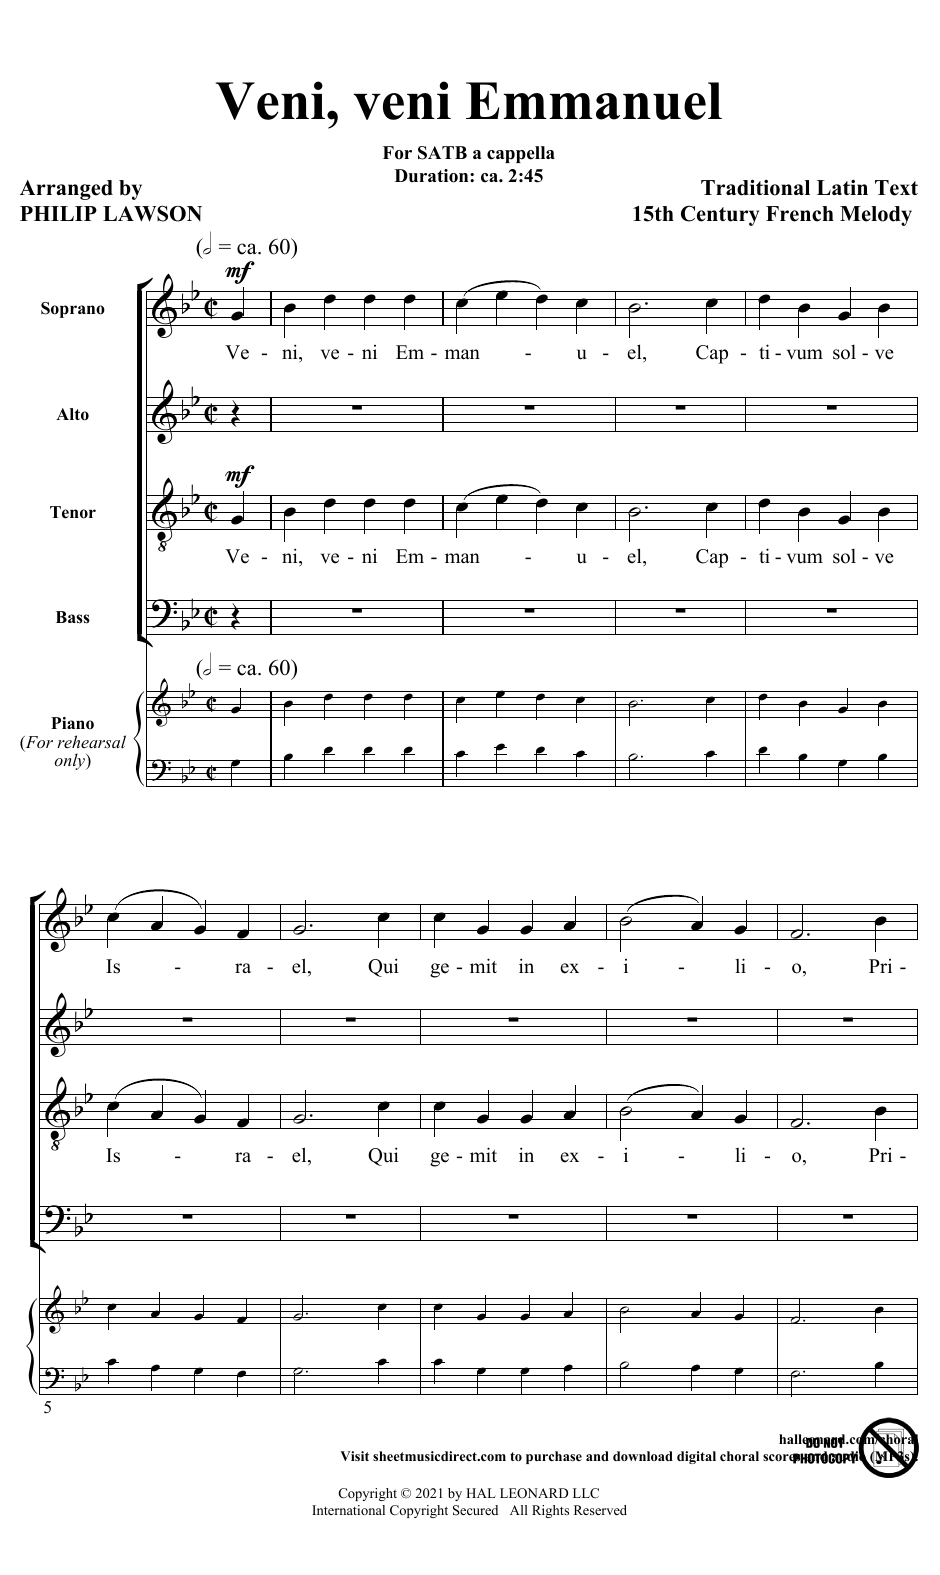 Download 15th Century French Melody Veni, Veni Emmanuel (arr. Philip Lawson Sheet Music